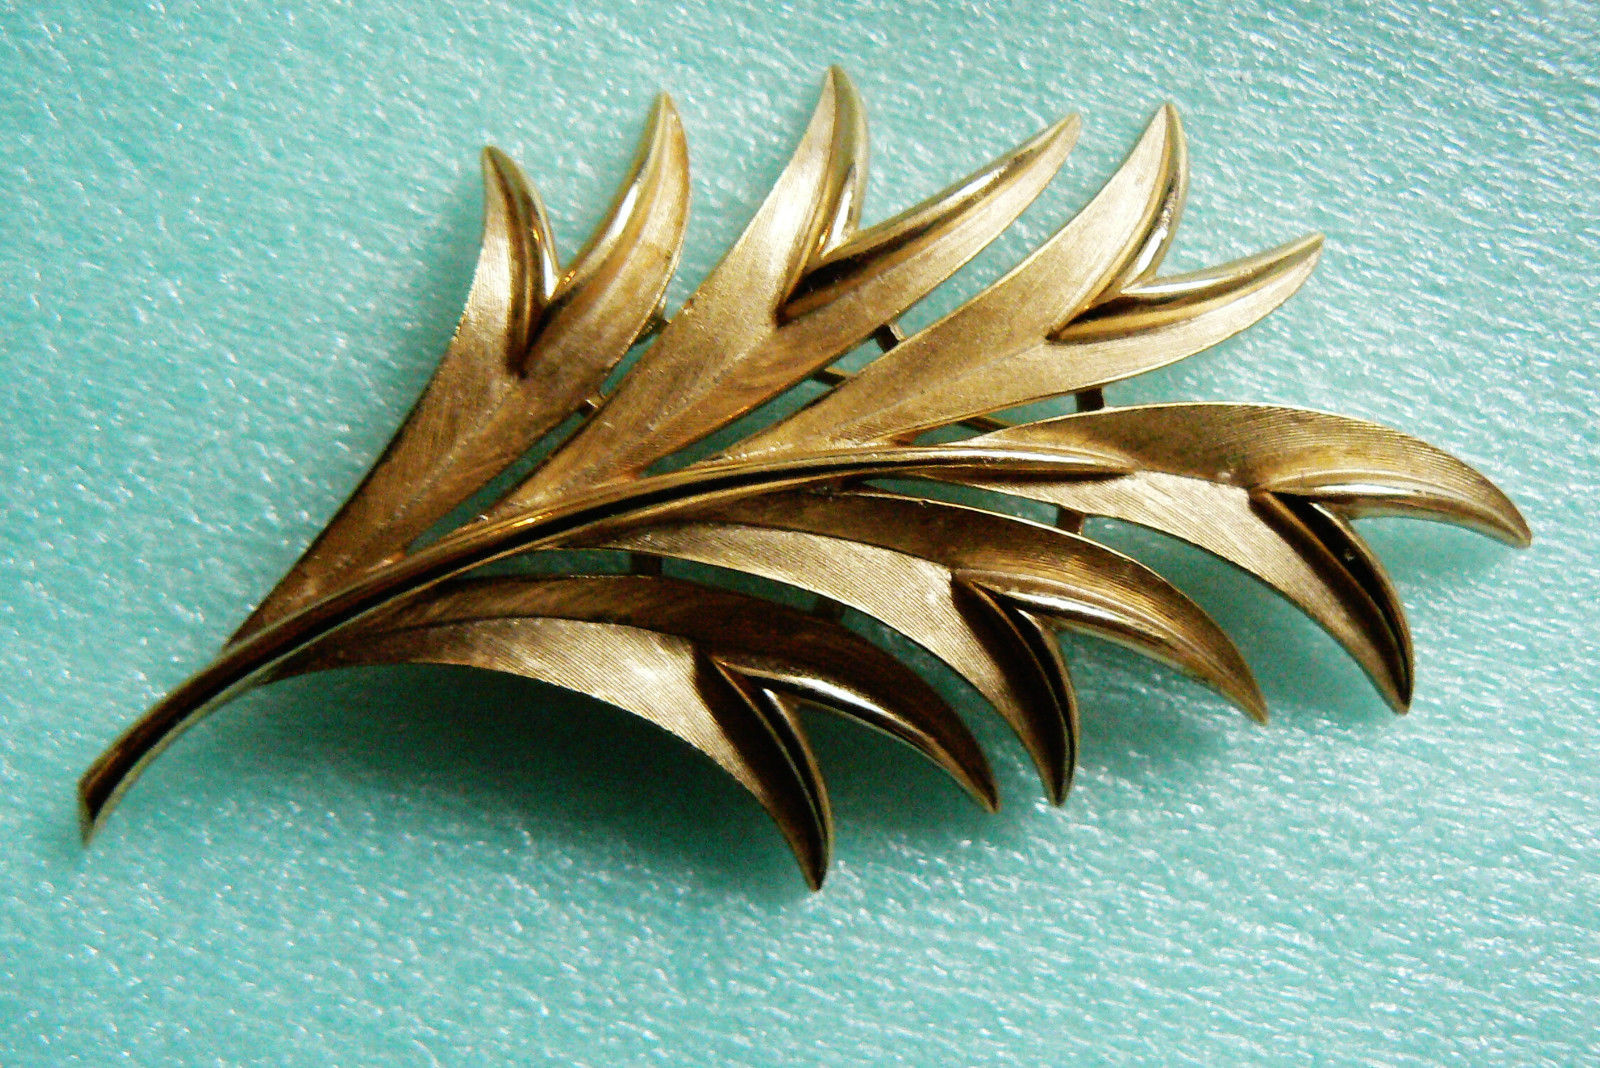 Vintage pare crown trifari signed brushed gold tone metal leaf PIN brooch.